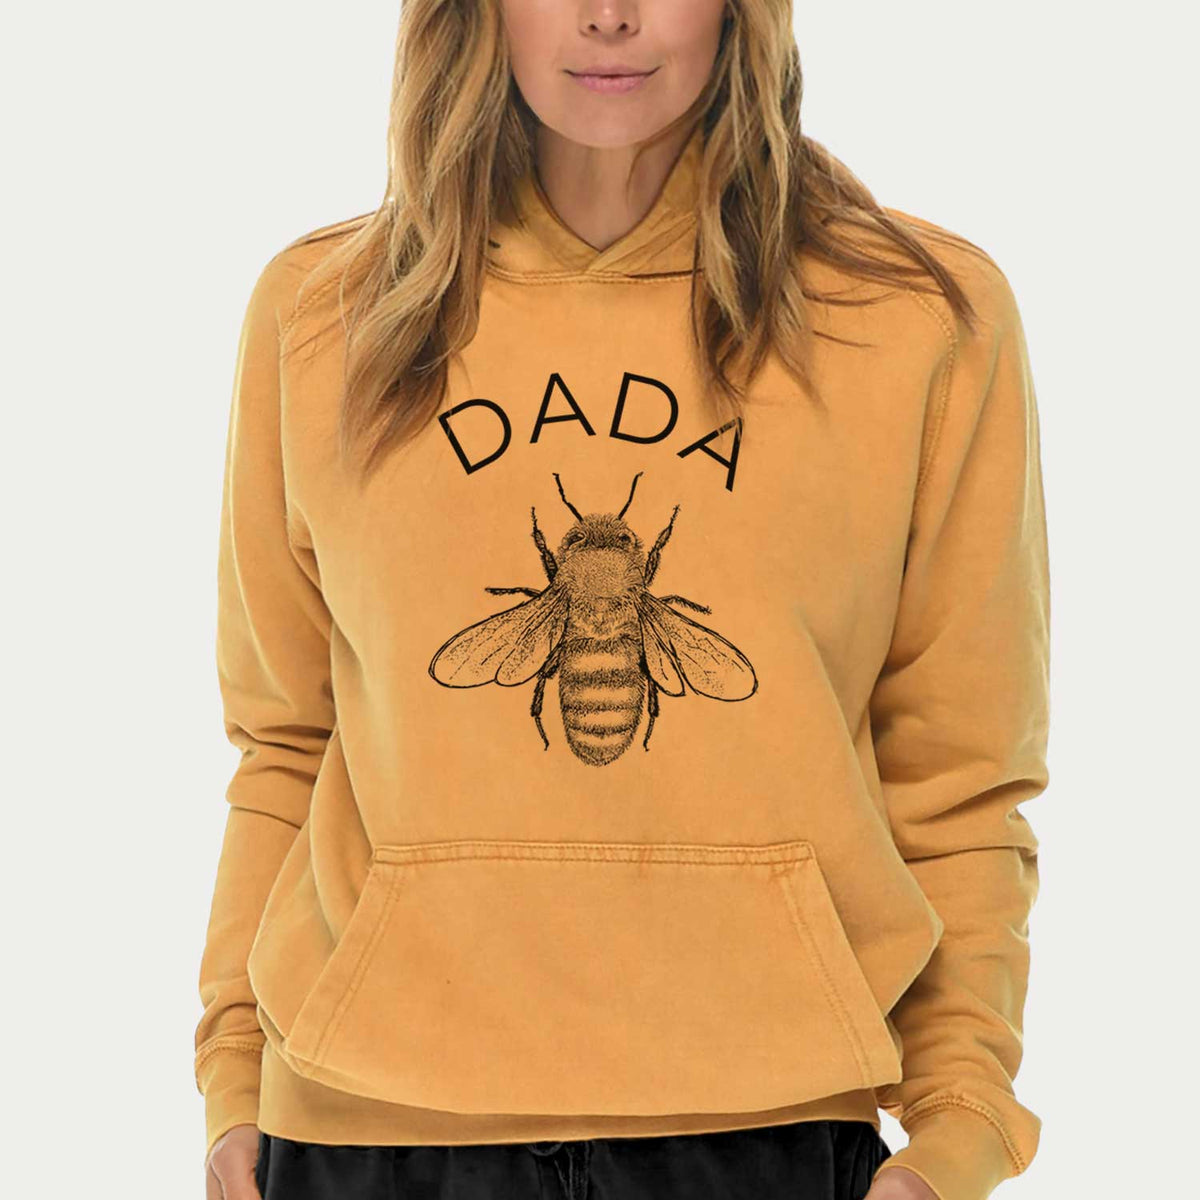 Dada Bee  - Mid-Weight Unisex Vintage 100% Cotton Hoodie